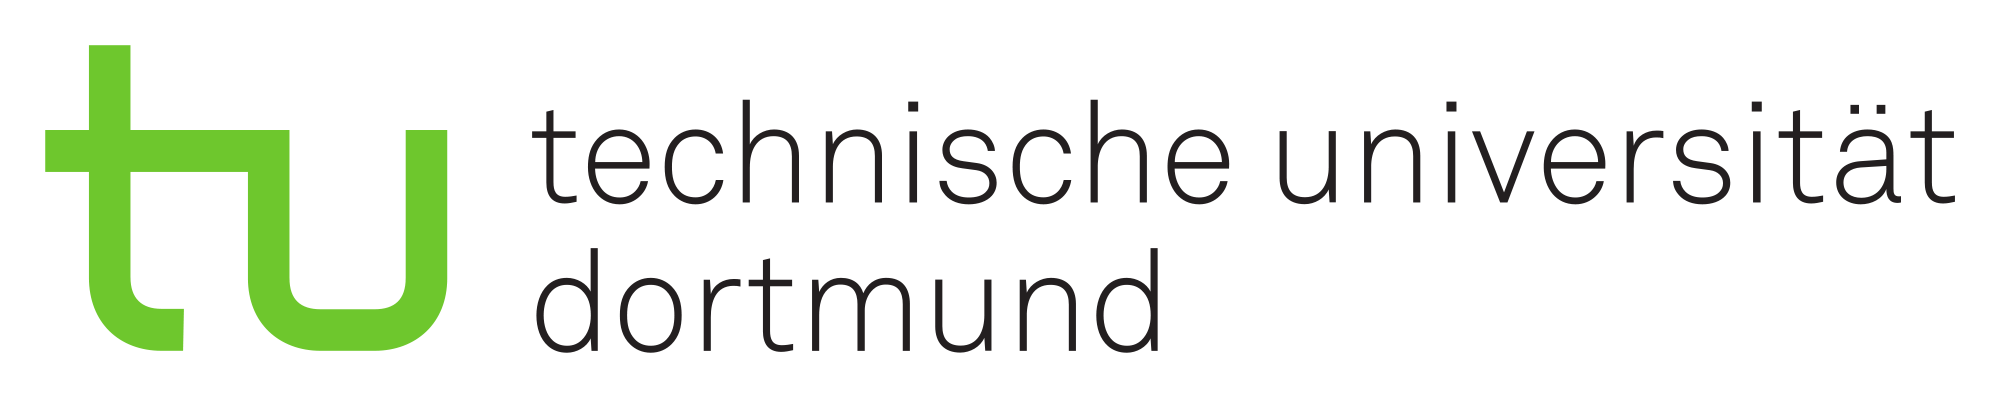 Logo TU Bergakademie Freiberg